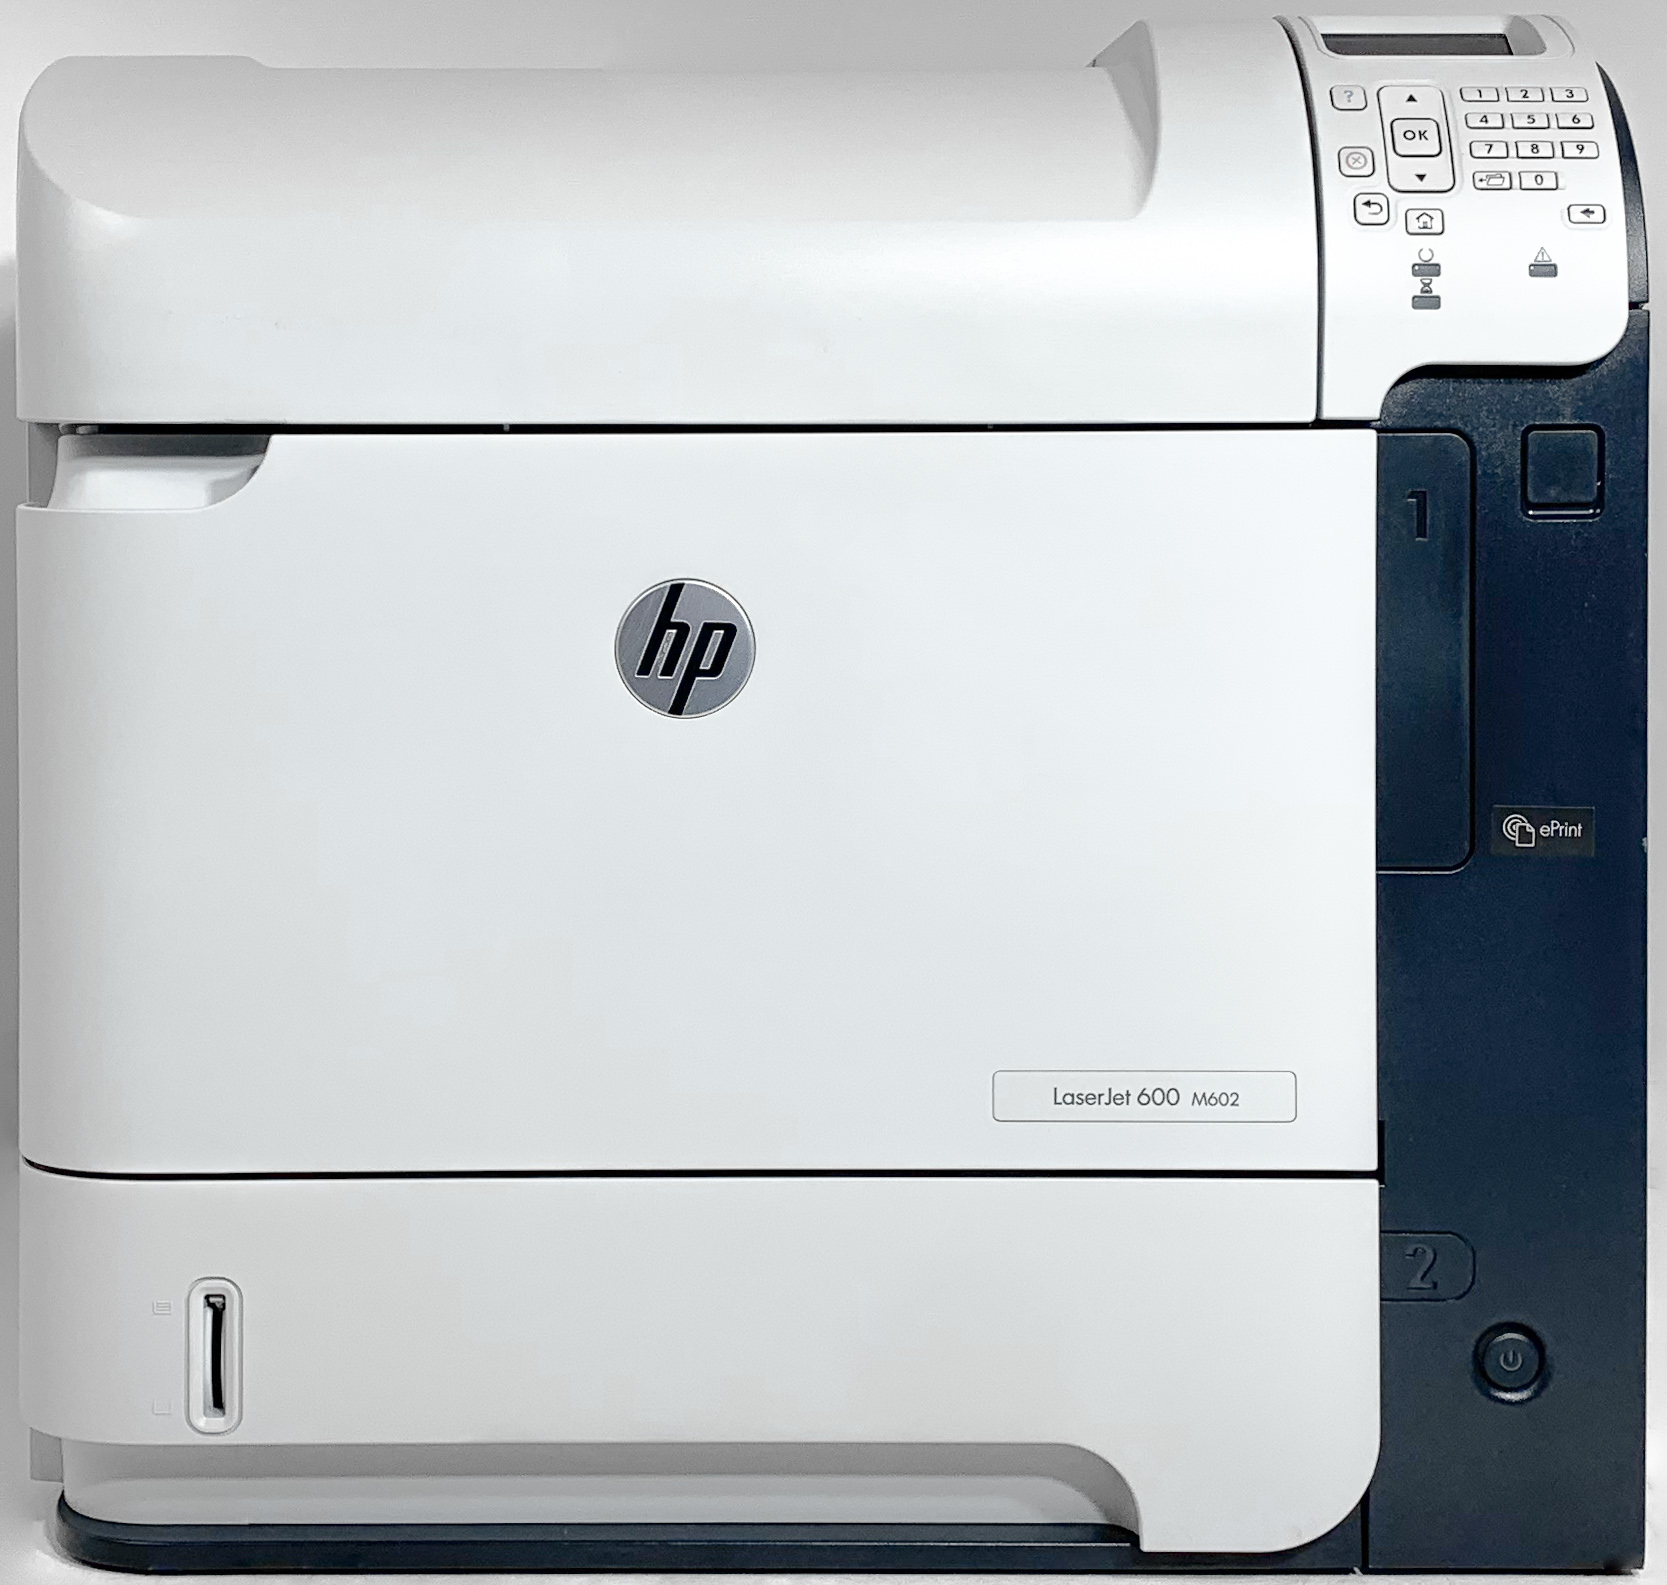 HP LaserJet Enterprise 600 M602N Laser Printer CE991A - White Spider